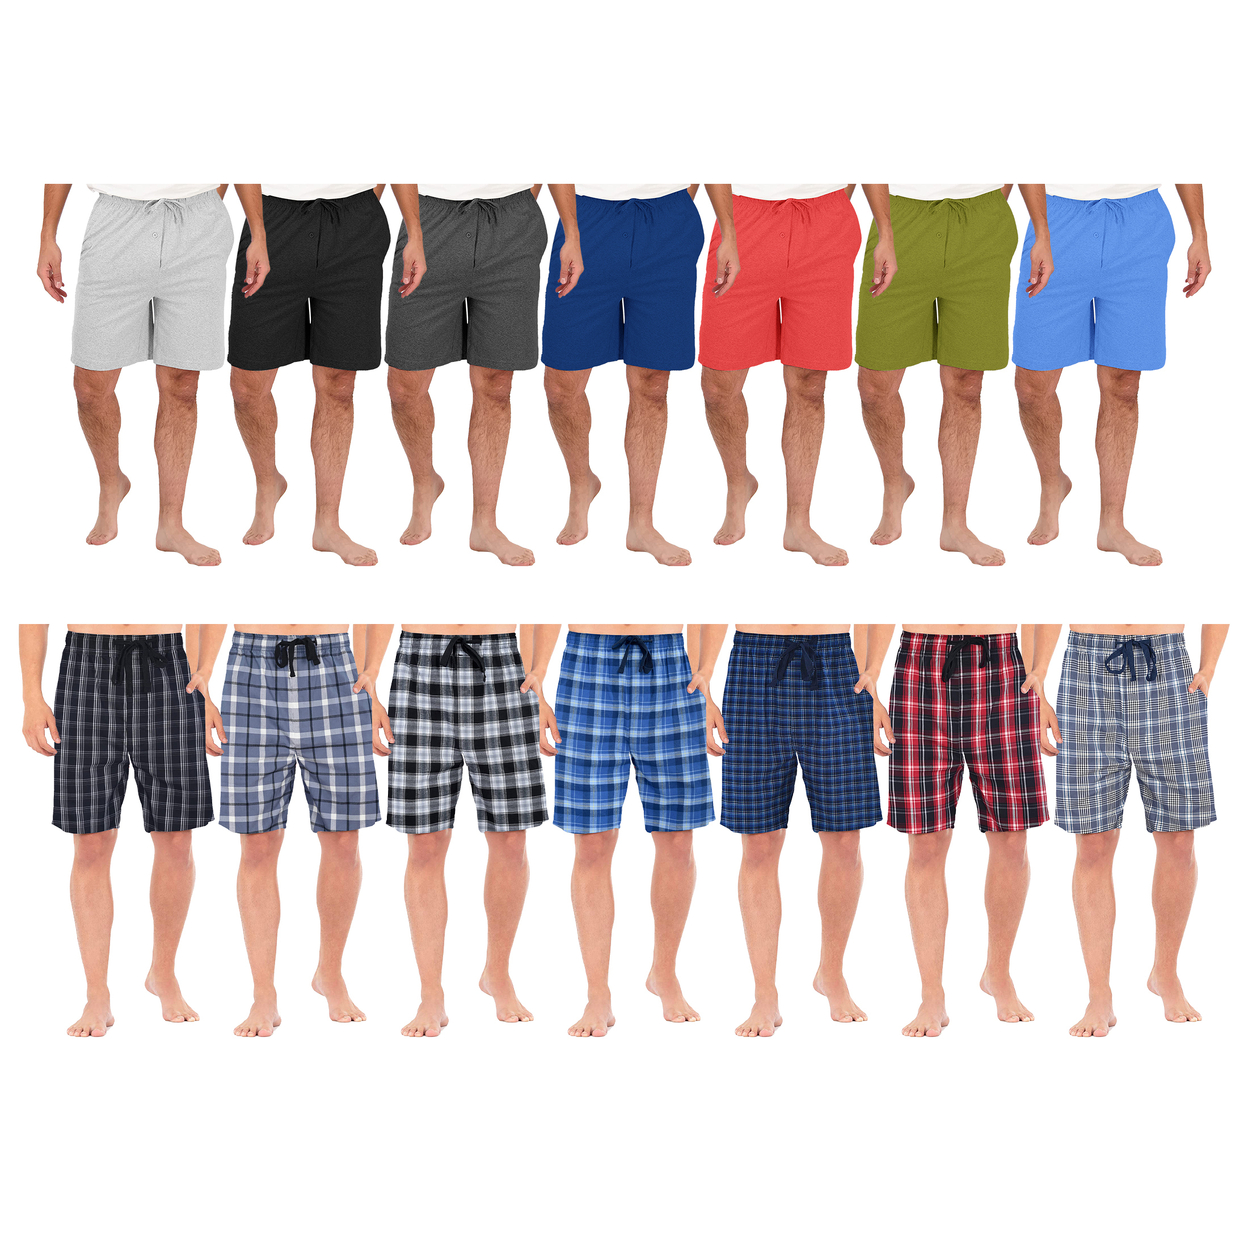 3-Pack: Men's Ultra Soft Knit Lounge Pajama Sleep Shorts - Plaid, Small